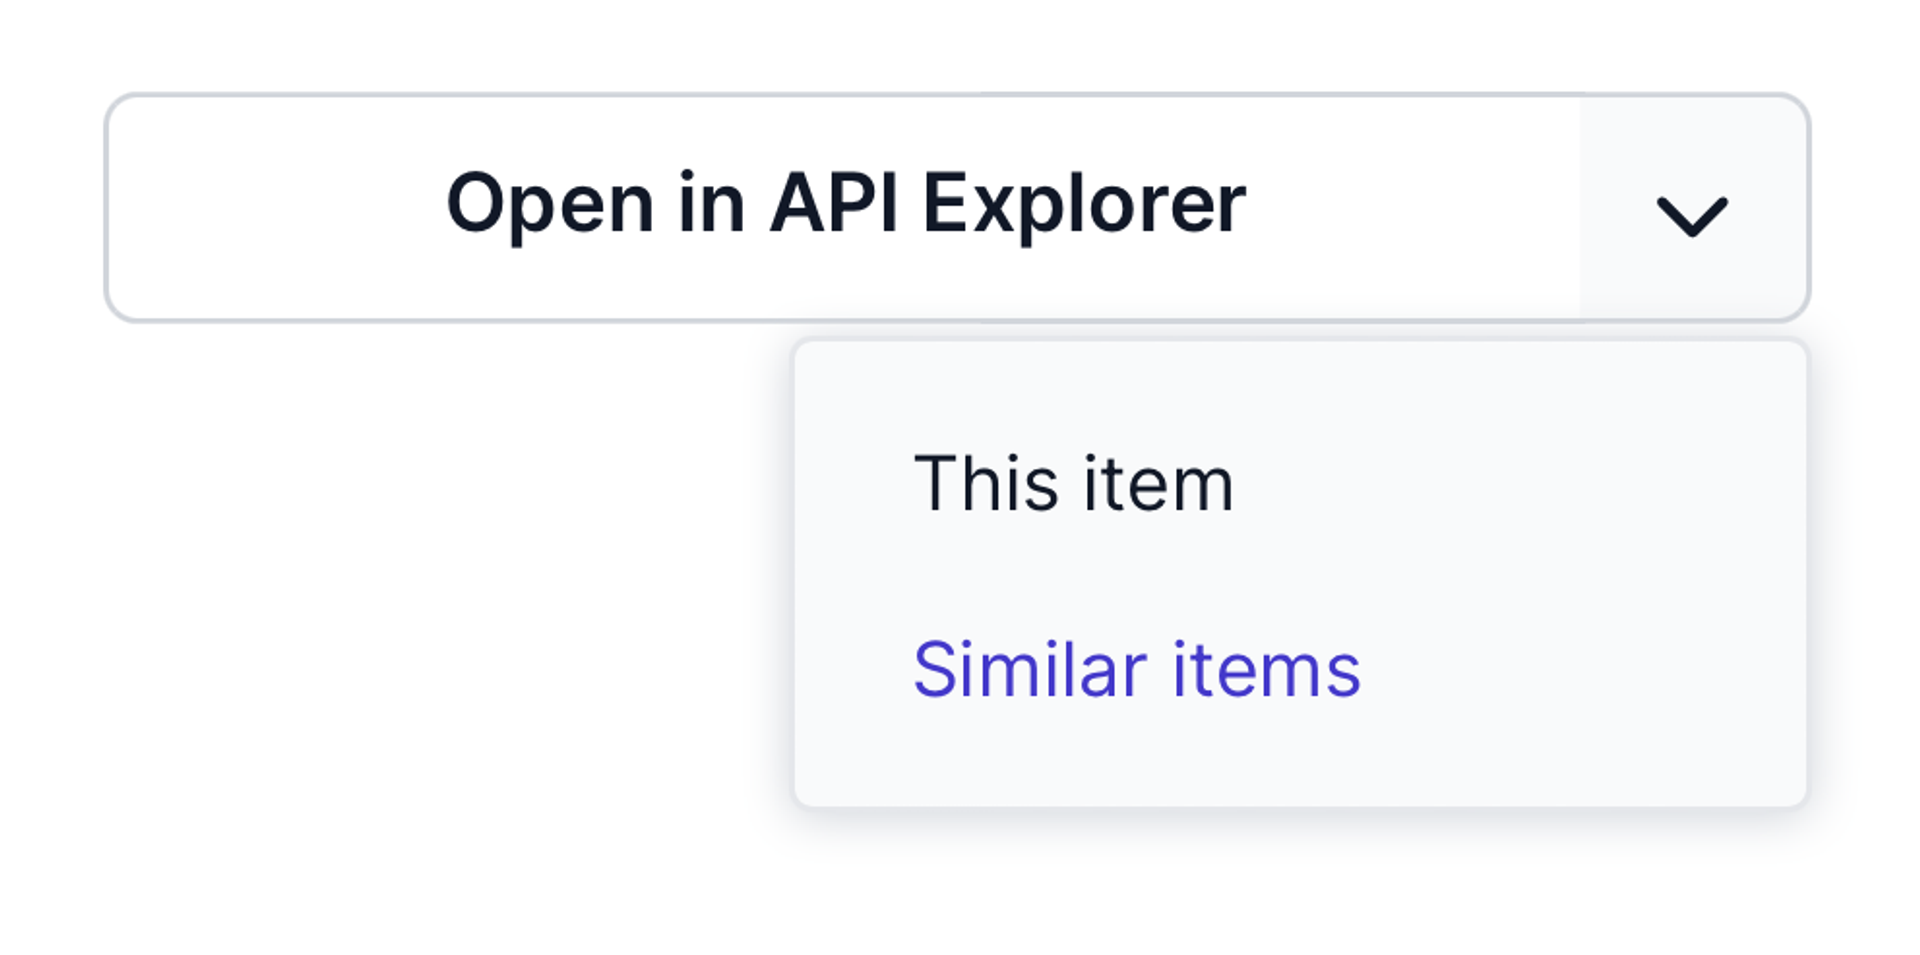 Open in API explorer similar items